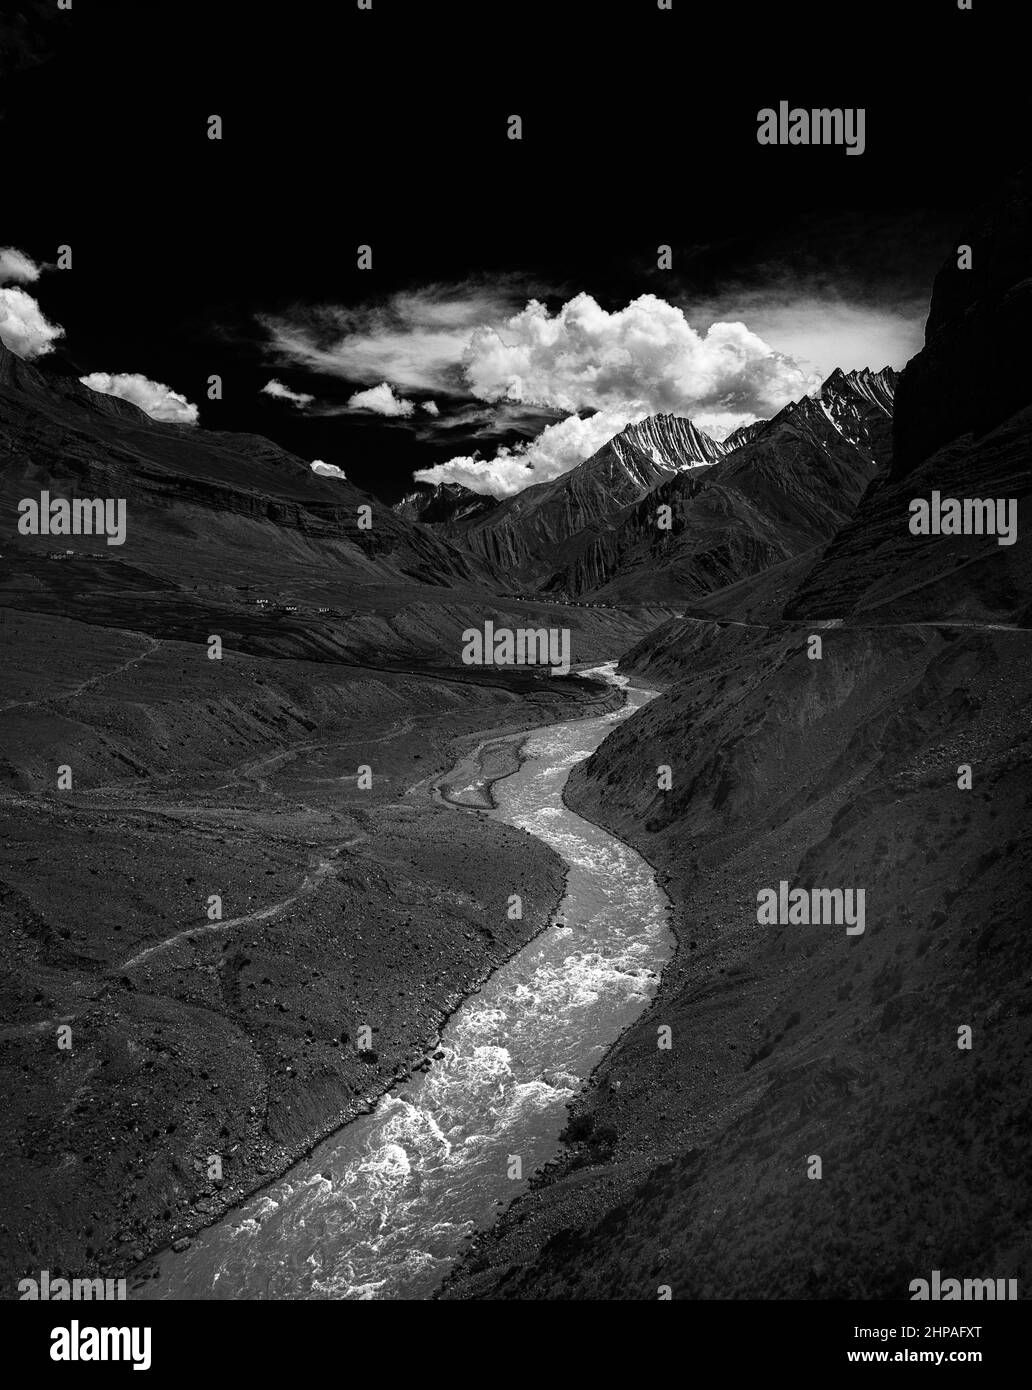 Pin River in pin Vally, Valle di Spiti, Himachal Pradesh, India Foto Stock